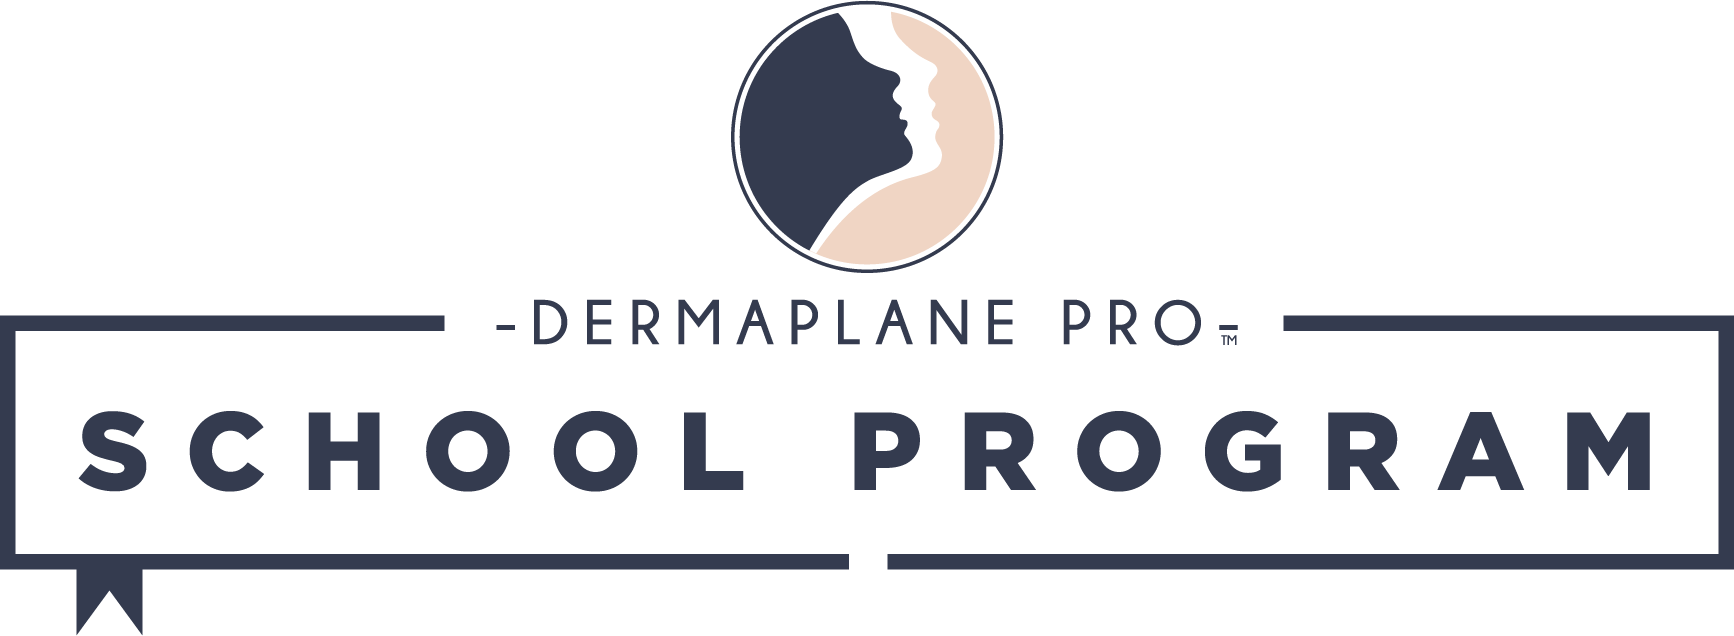 DermaplanePro School Program